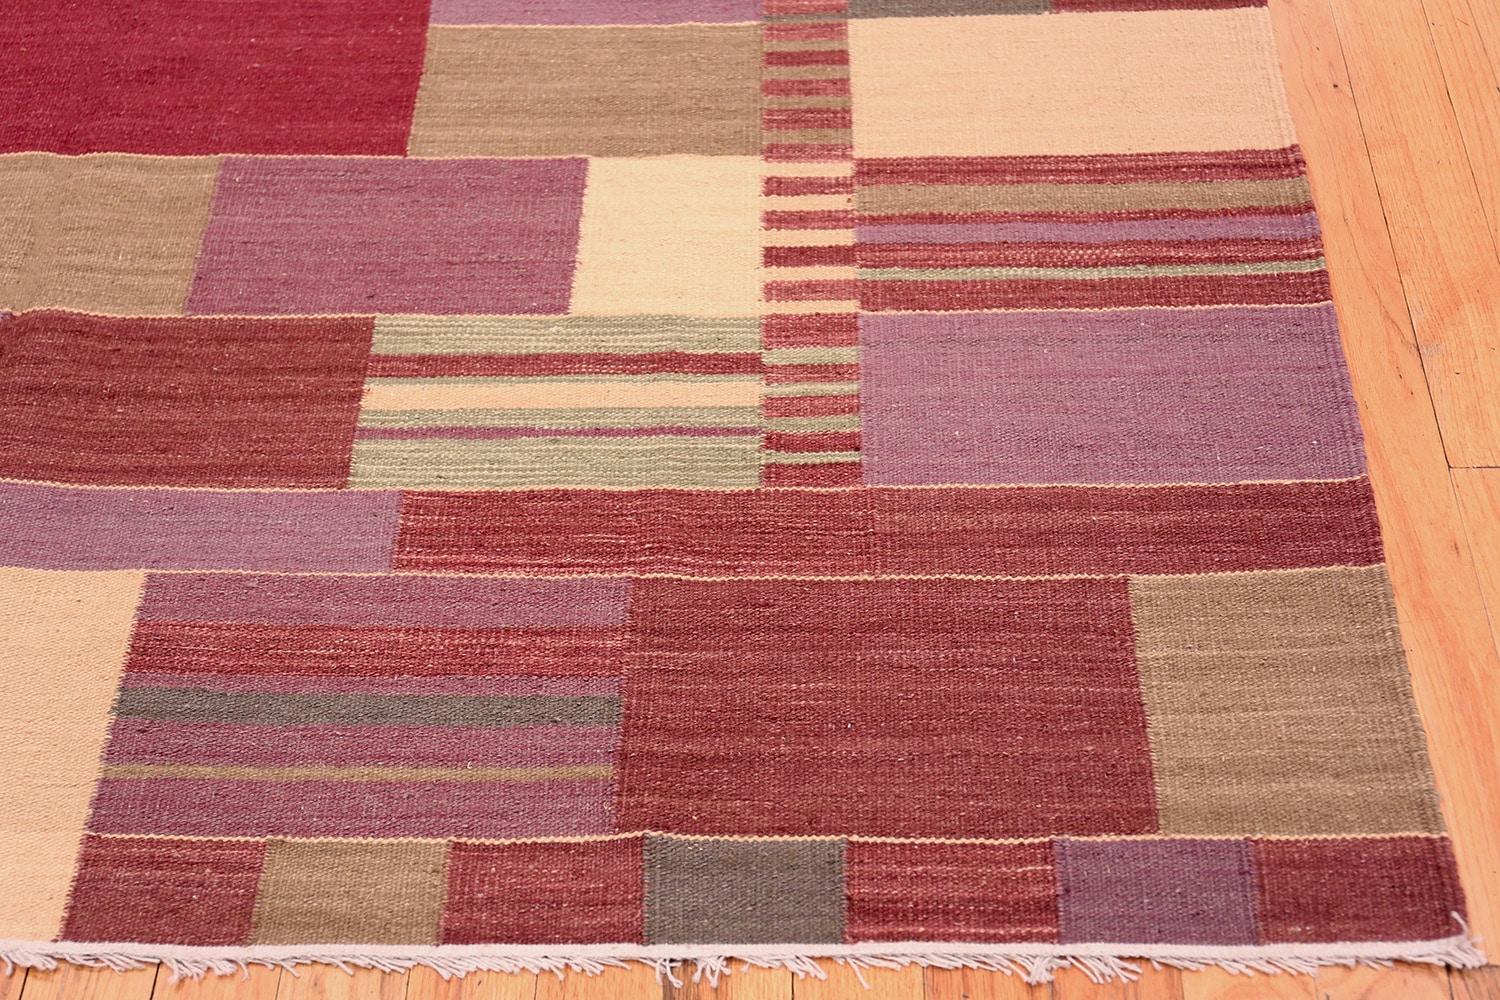 Wool Swedish Inspired Scandinavian Modern Kilim Carpet. Size: 7 ft x 9 ft 2 in